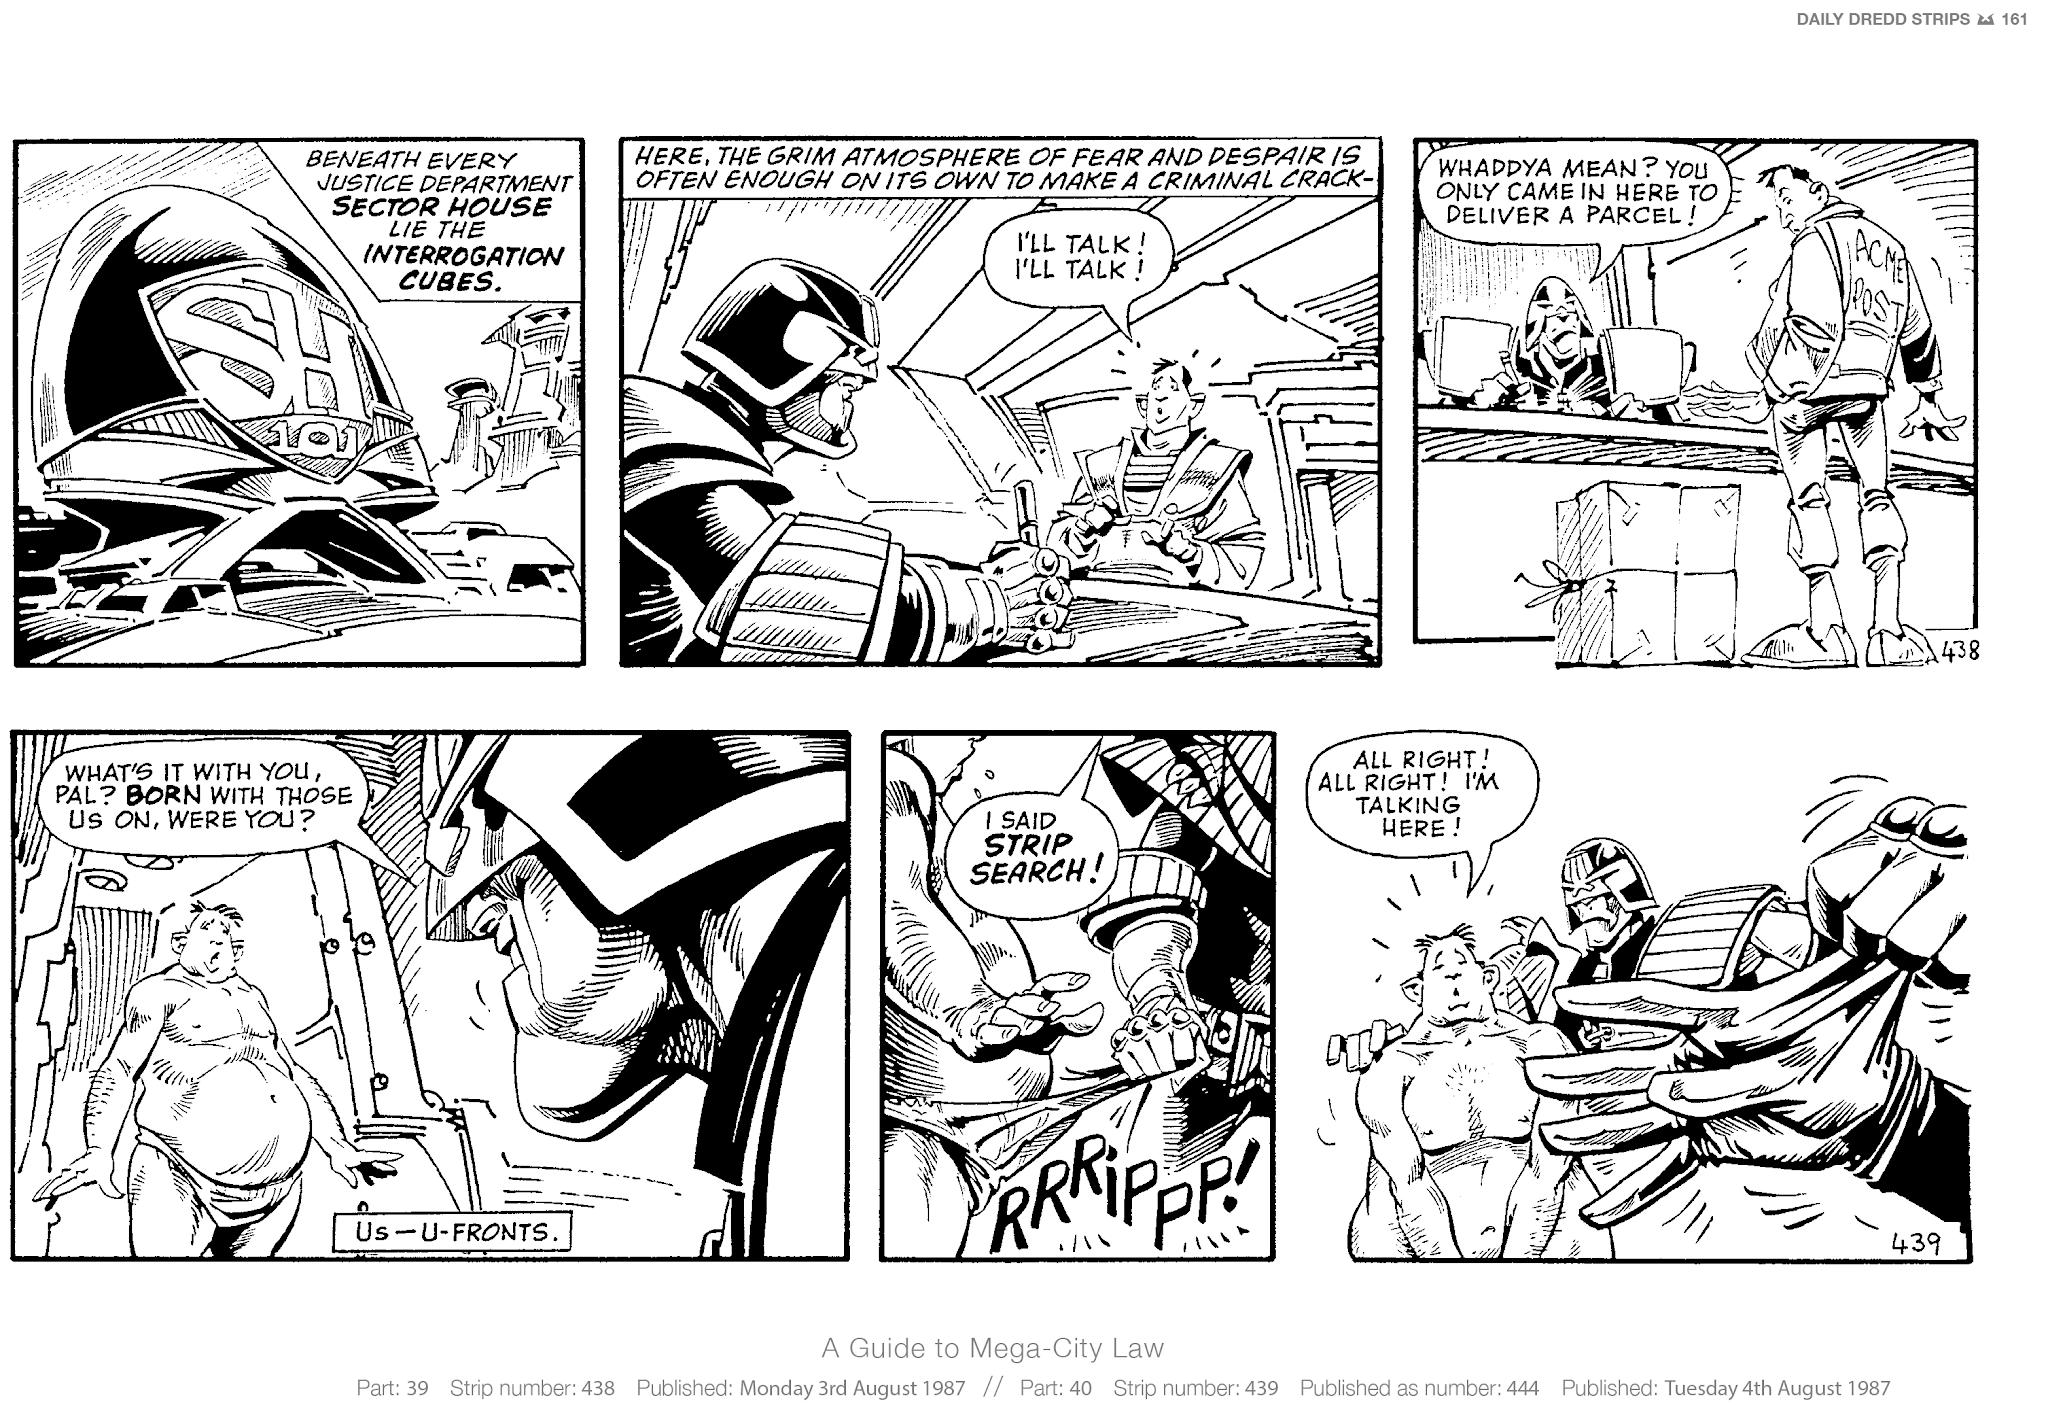 Read online Judge Dredd: The Daily Dredds comic -  Issue # TPB 2 - 164